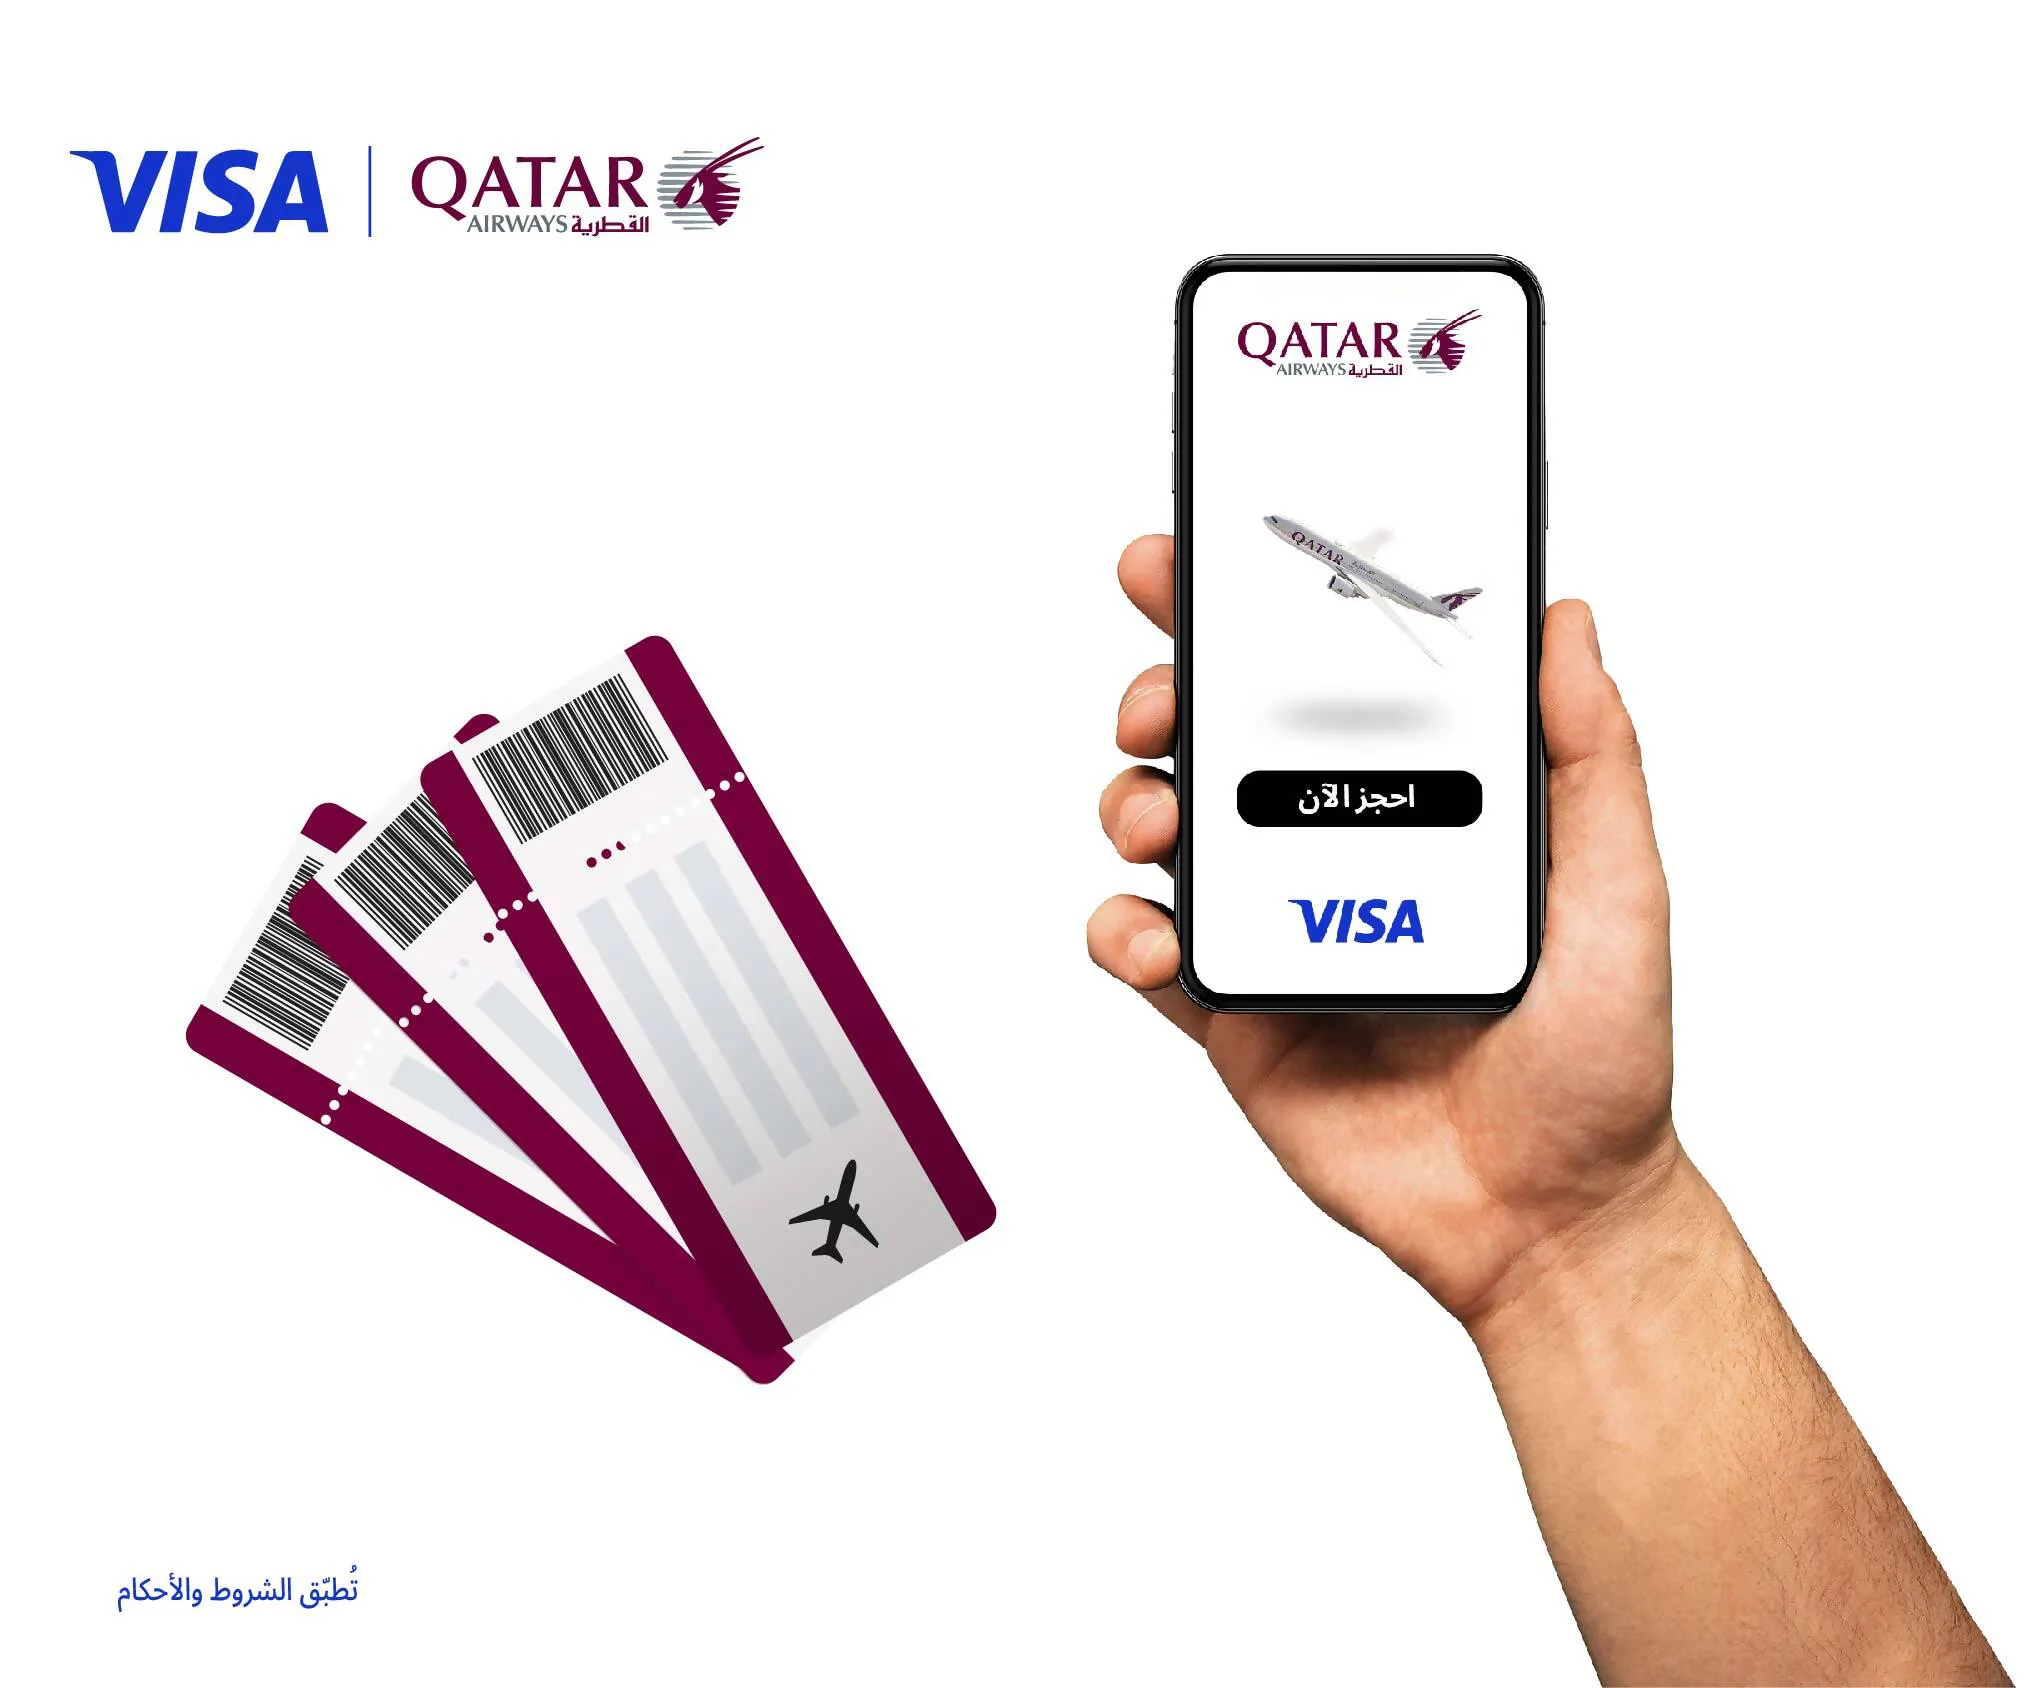 Visa Cross Border Qatar Airways KV_540x405